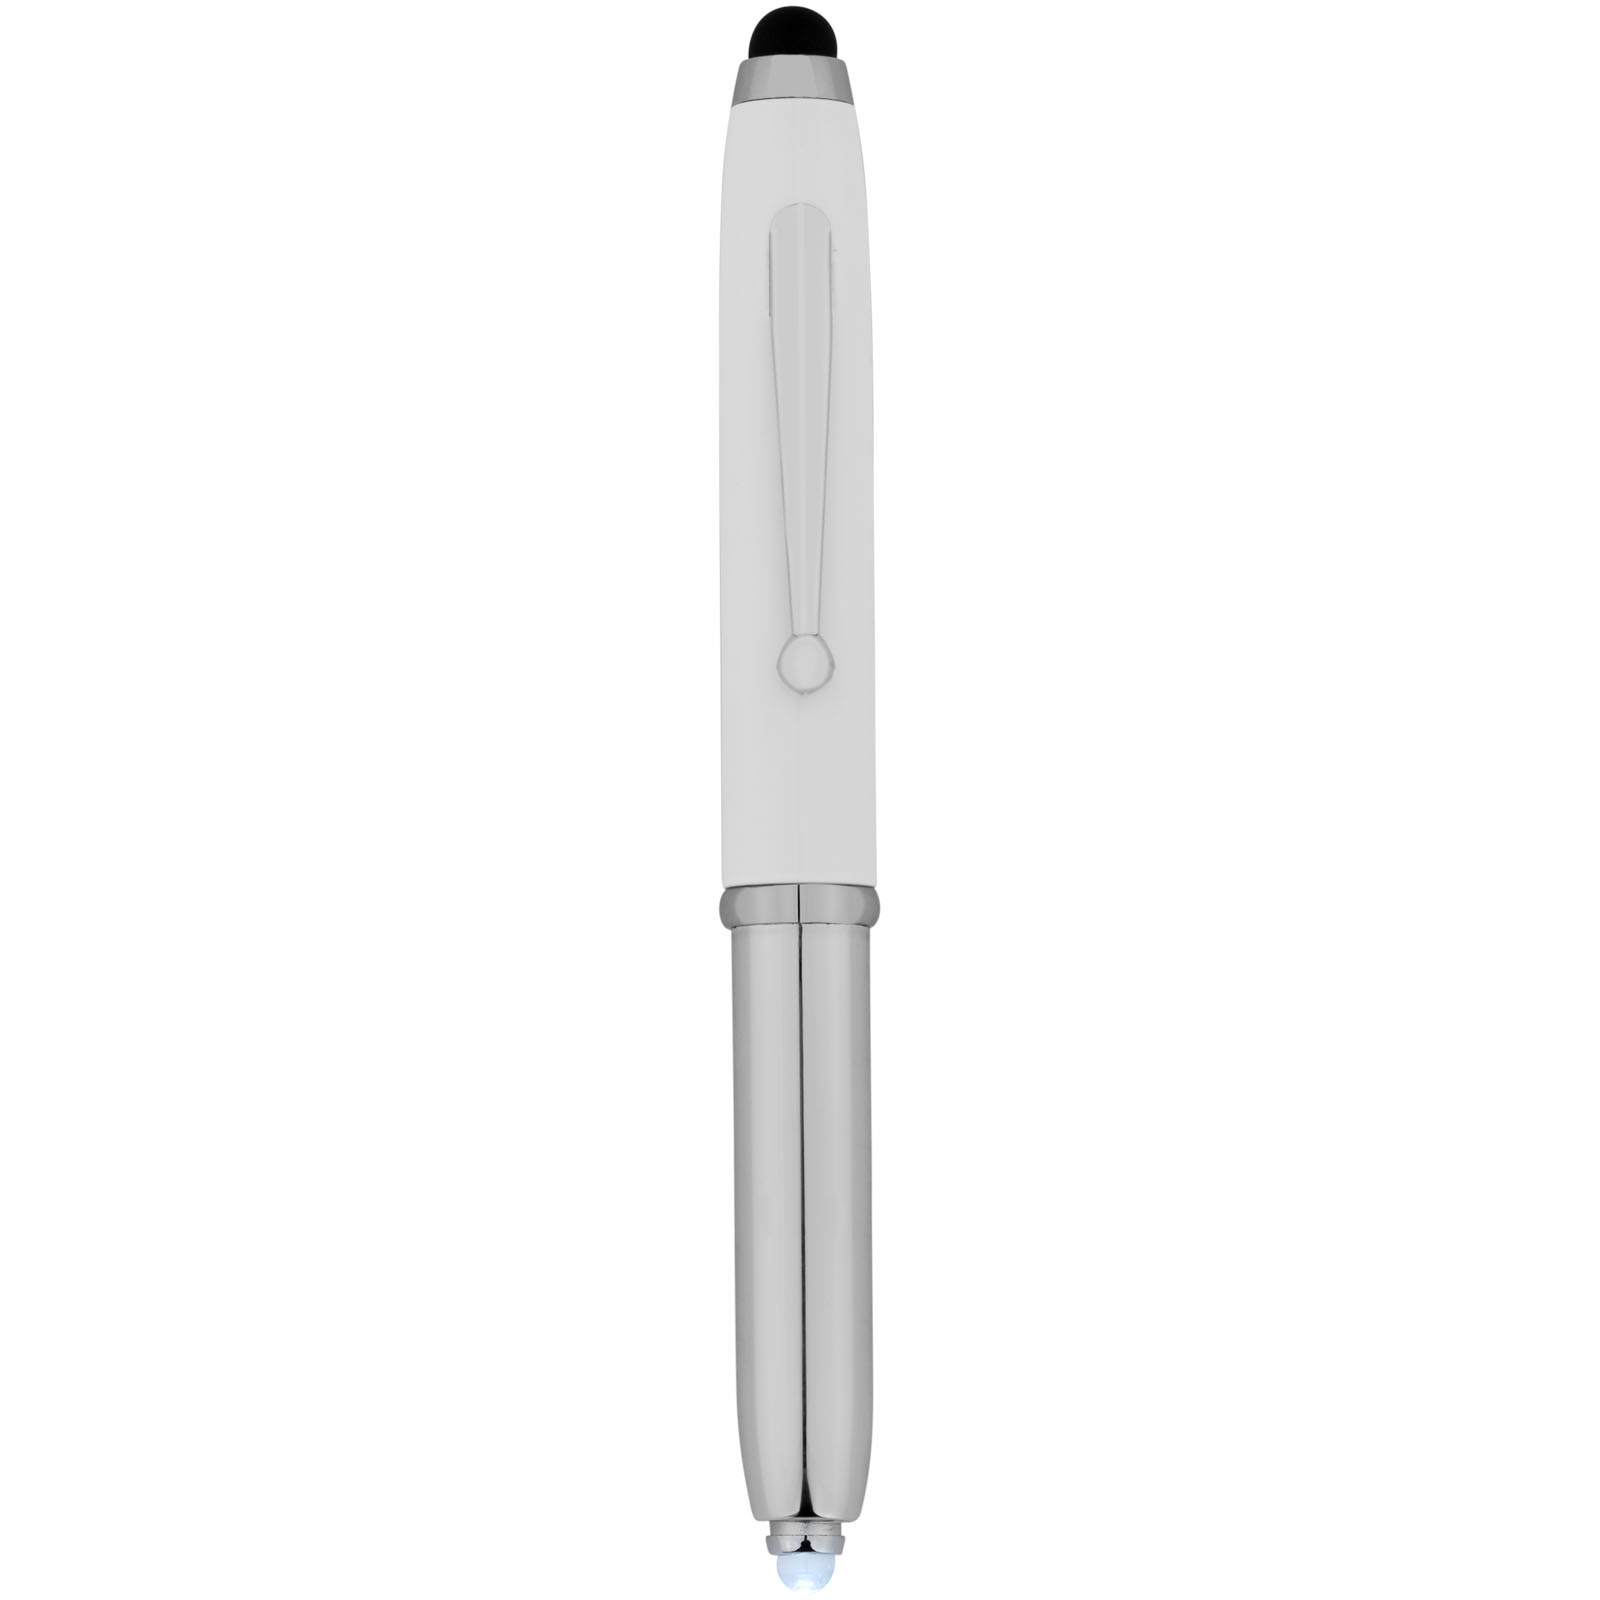 Advertising Ballpoint Pens - Xenon stylus ballpoint pen with LED light